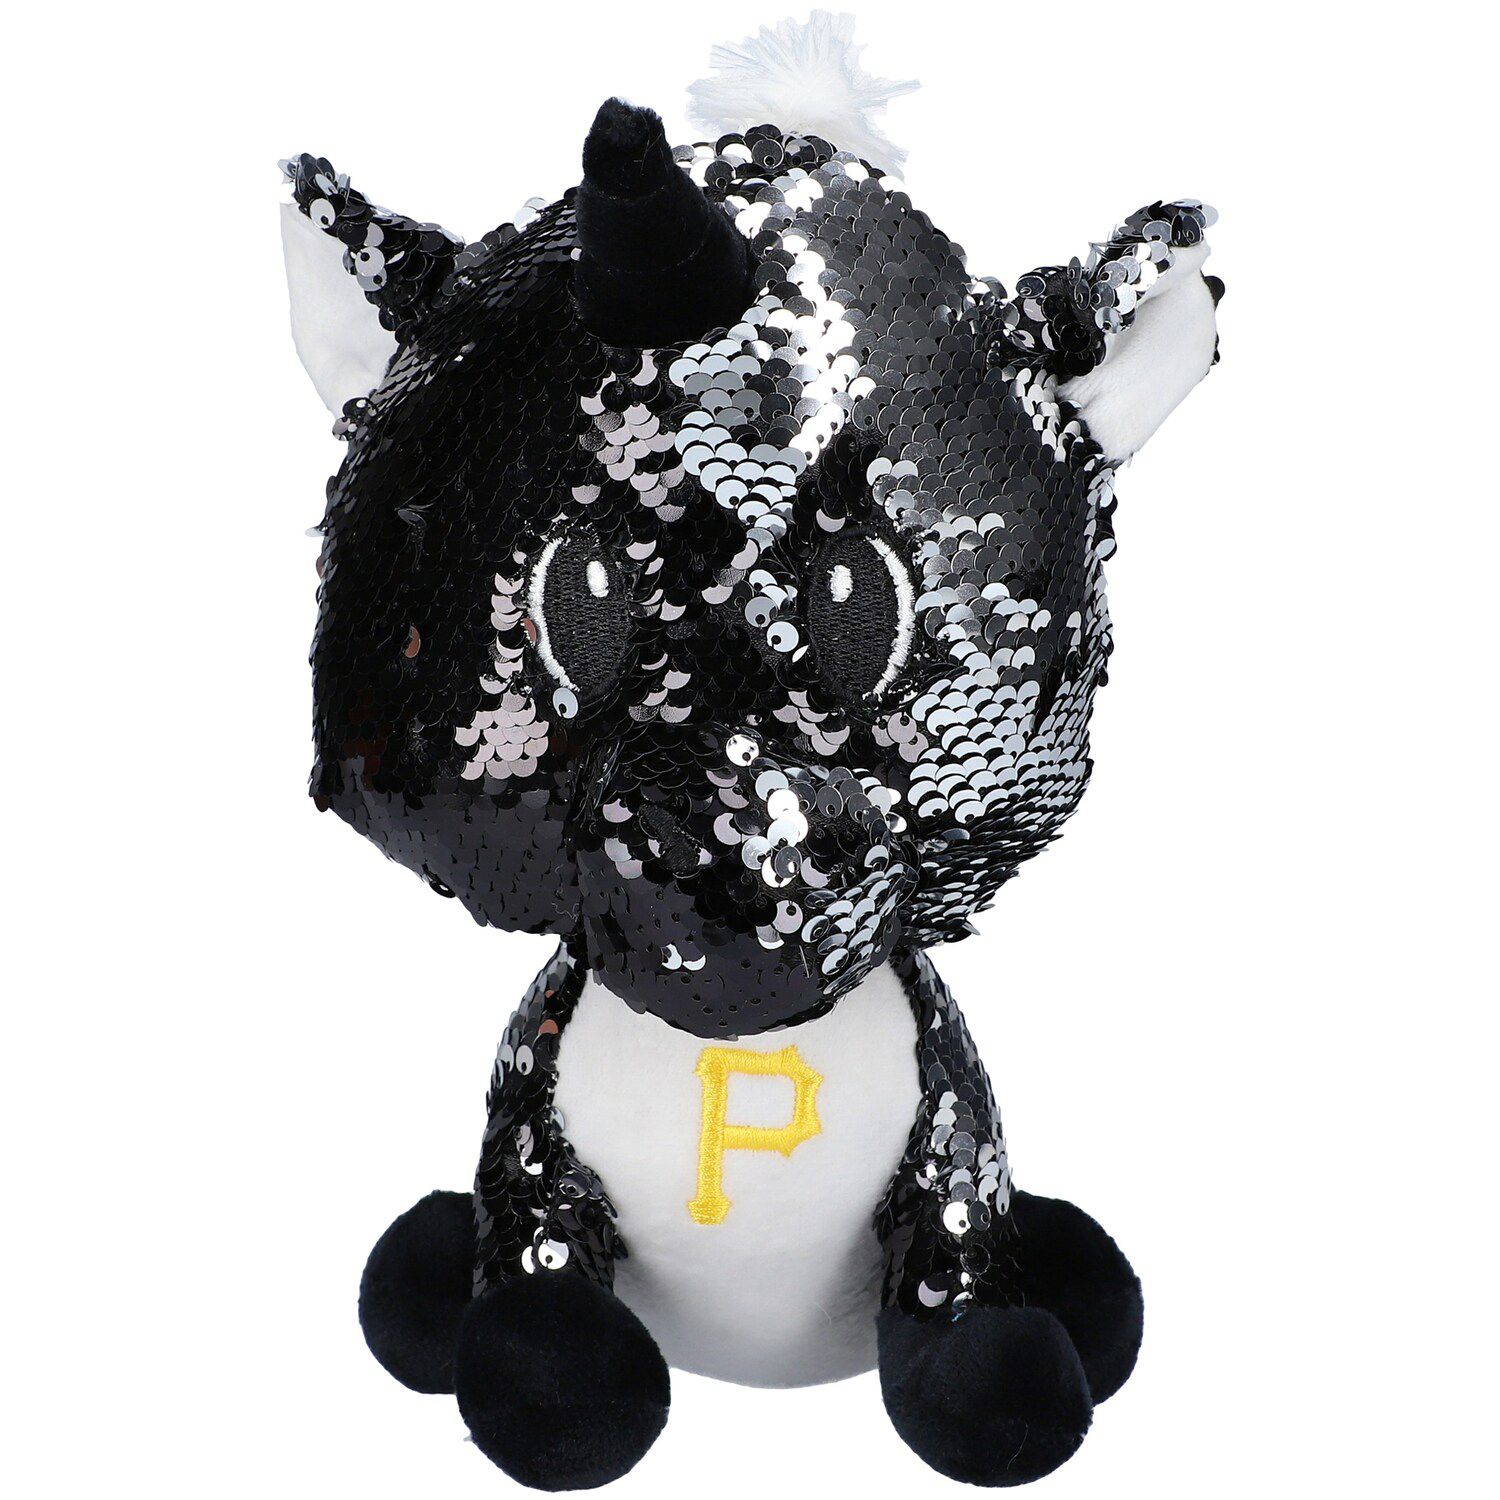 Pittsburgh Pirates Plushie Mascot Pillow